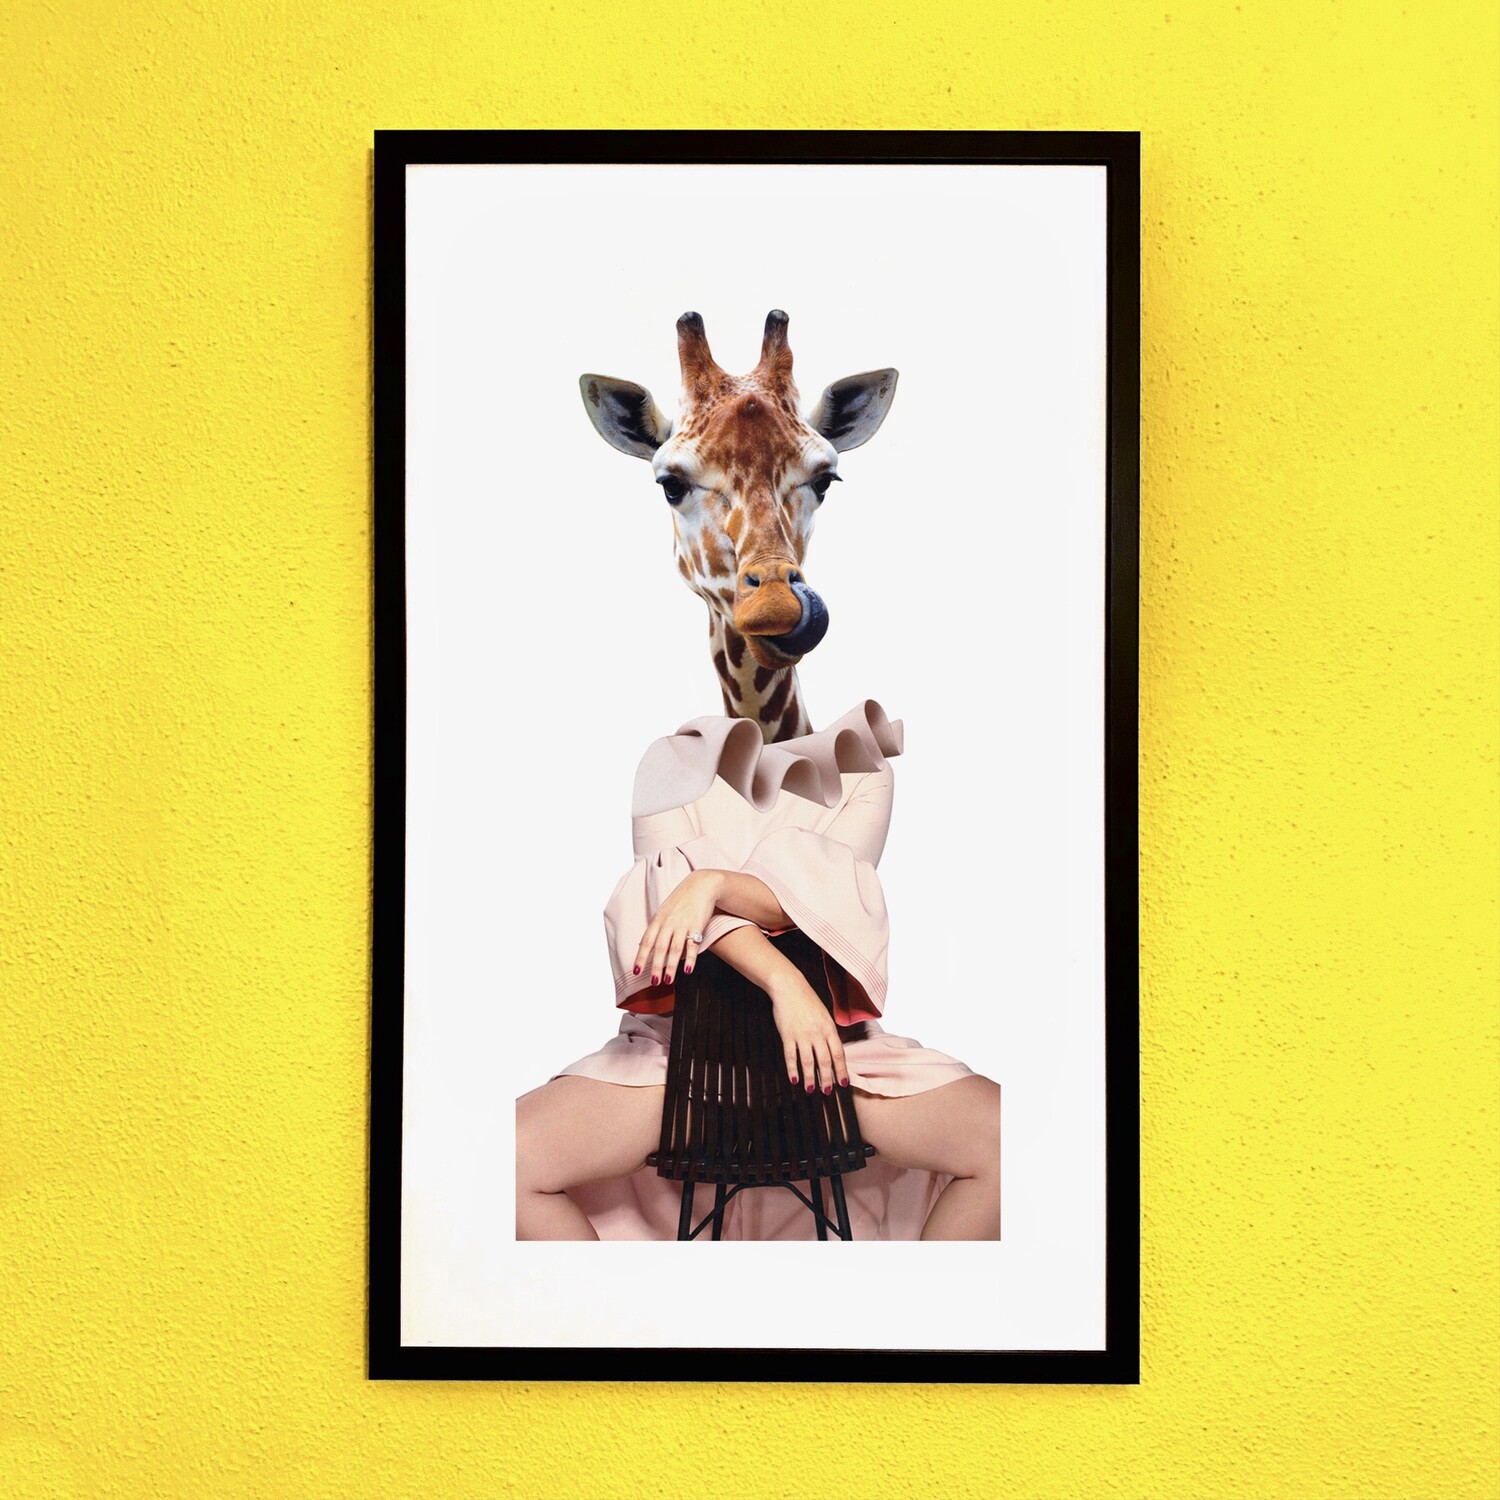 Giraffe | original handmade collage